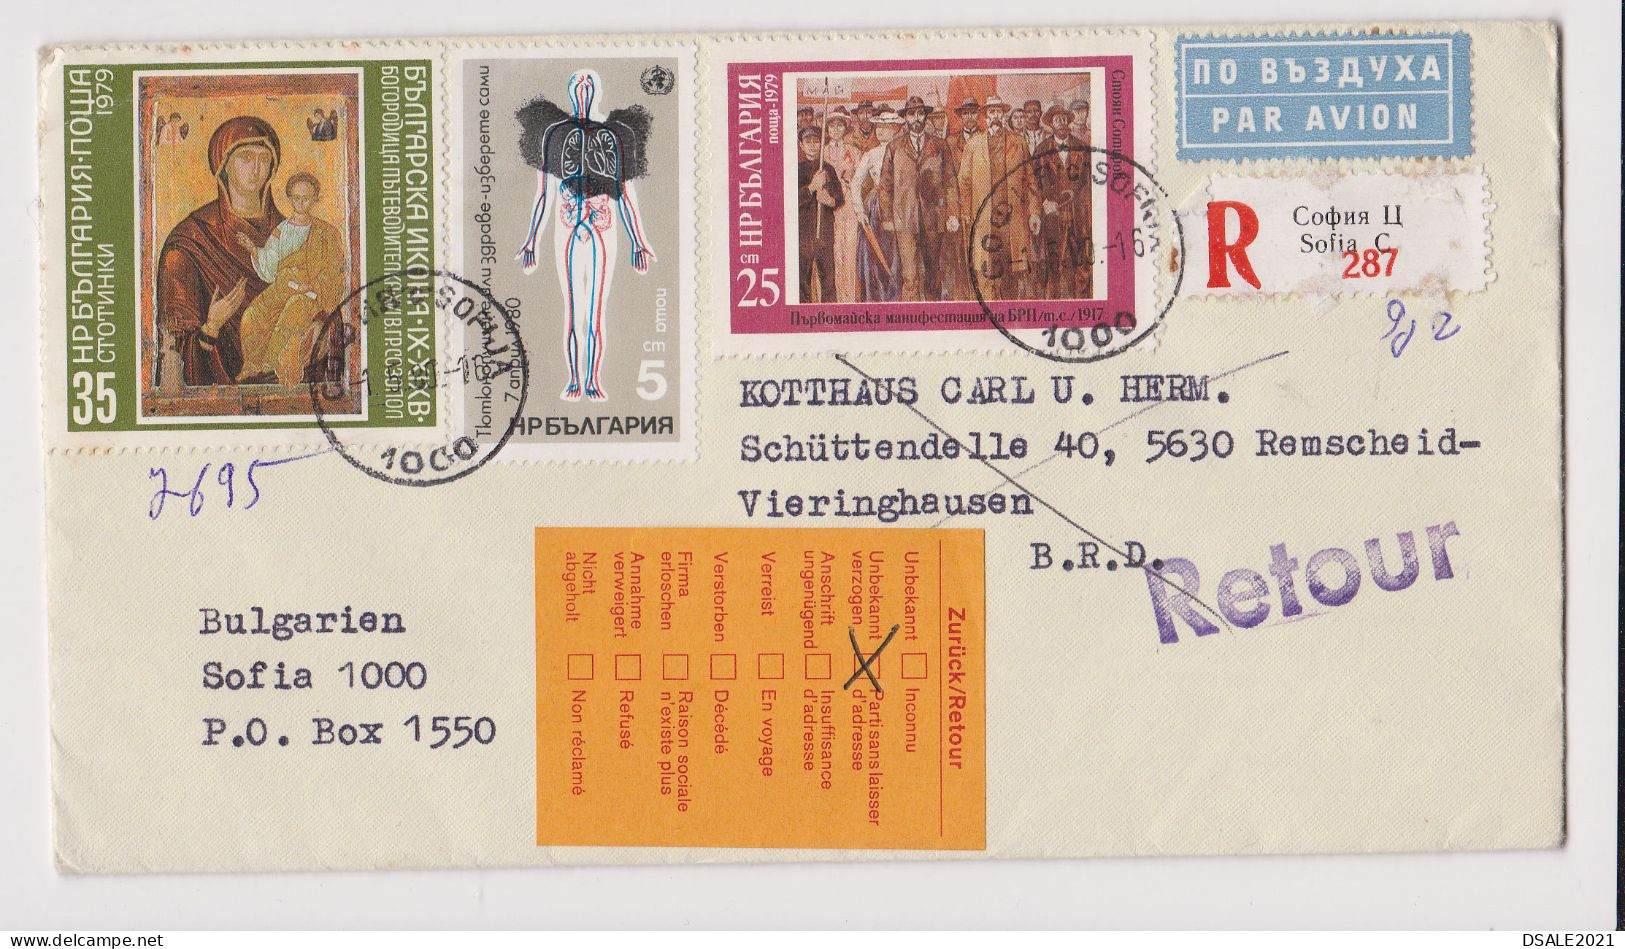 Bulgaria Bulgarien 1980 Registered Airmail Cover W/Colorful Topic Stamps Sent To Germany BRD, Return To Sender (66311) - Brieven En Documenten